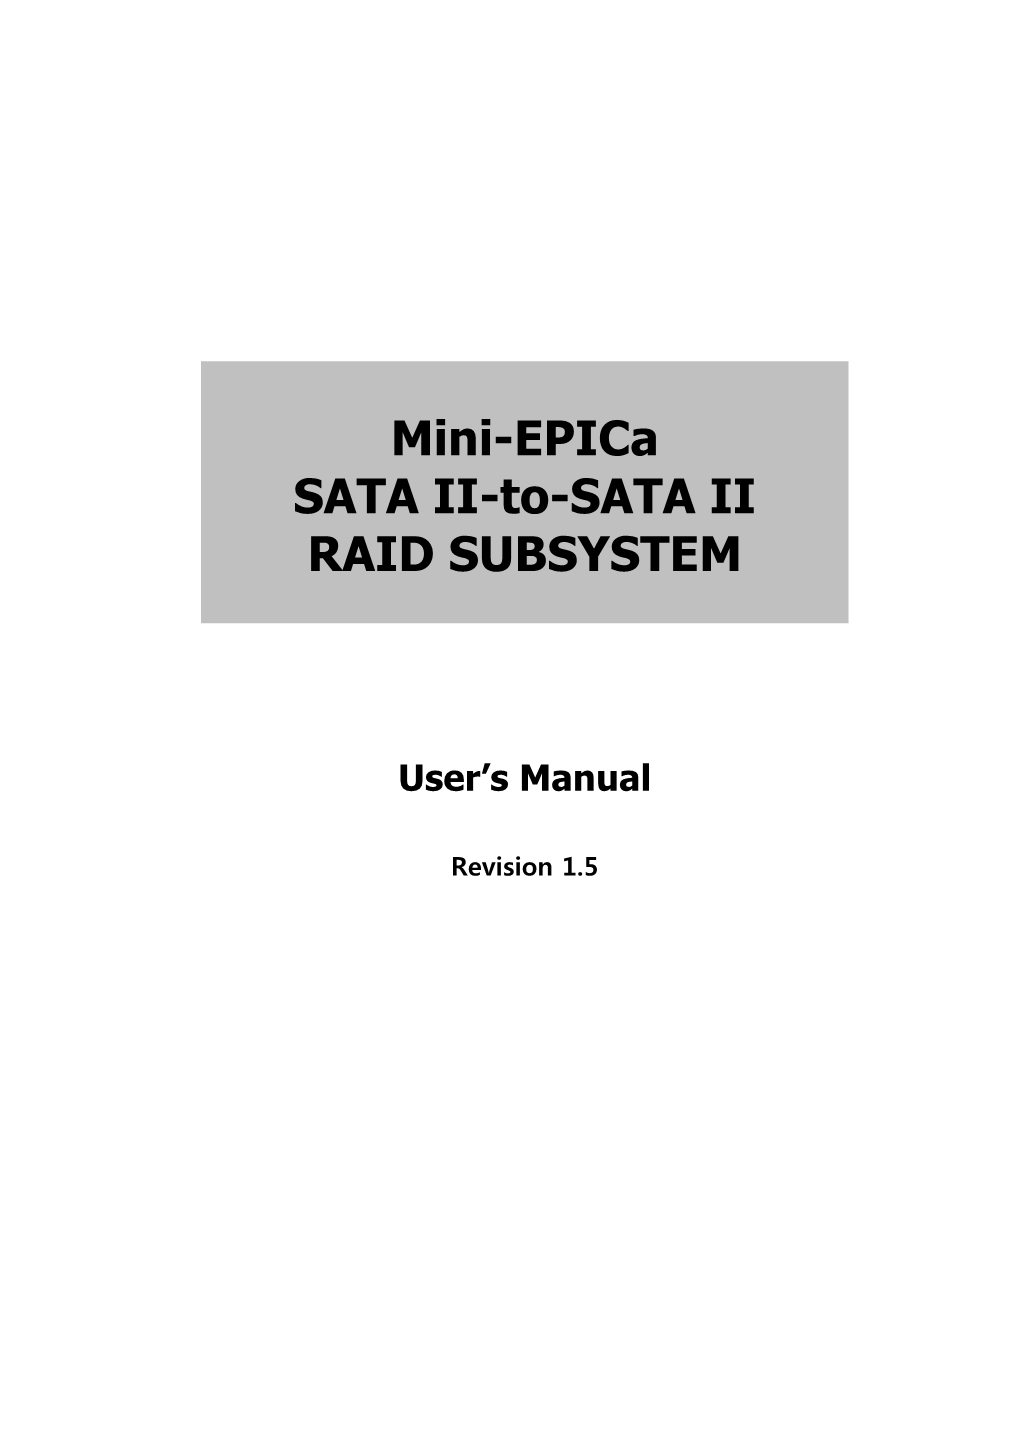 Mini-Epica SATA II-To-SATA II RAID SUBSYSTEM